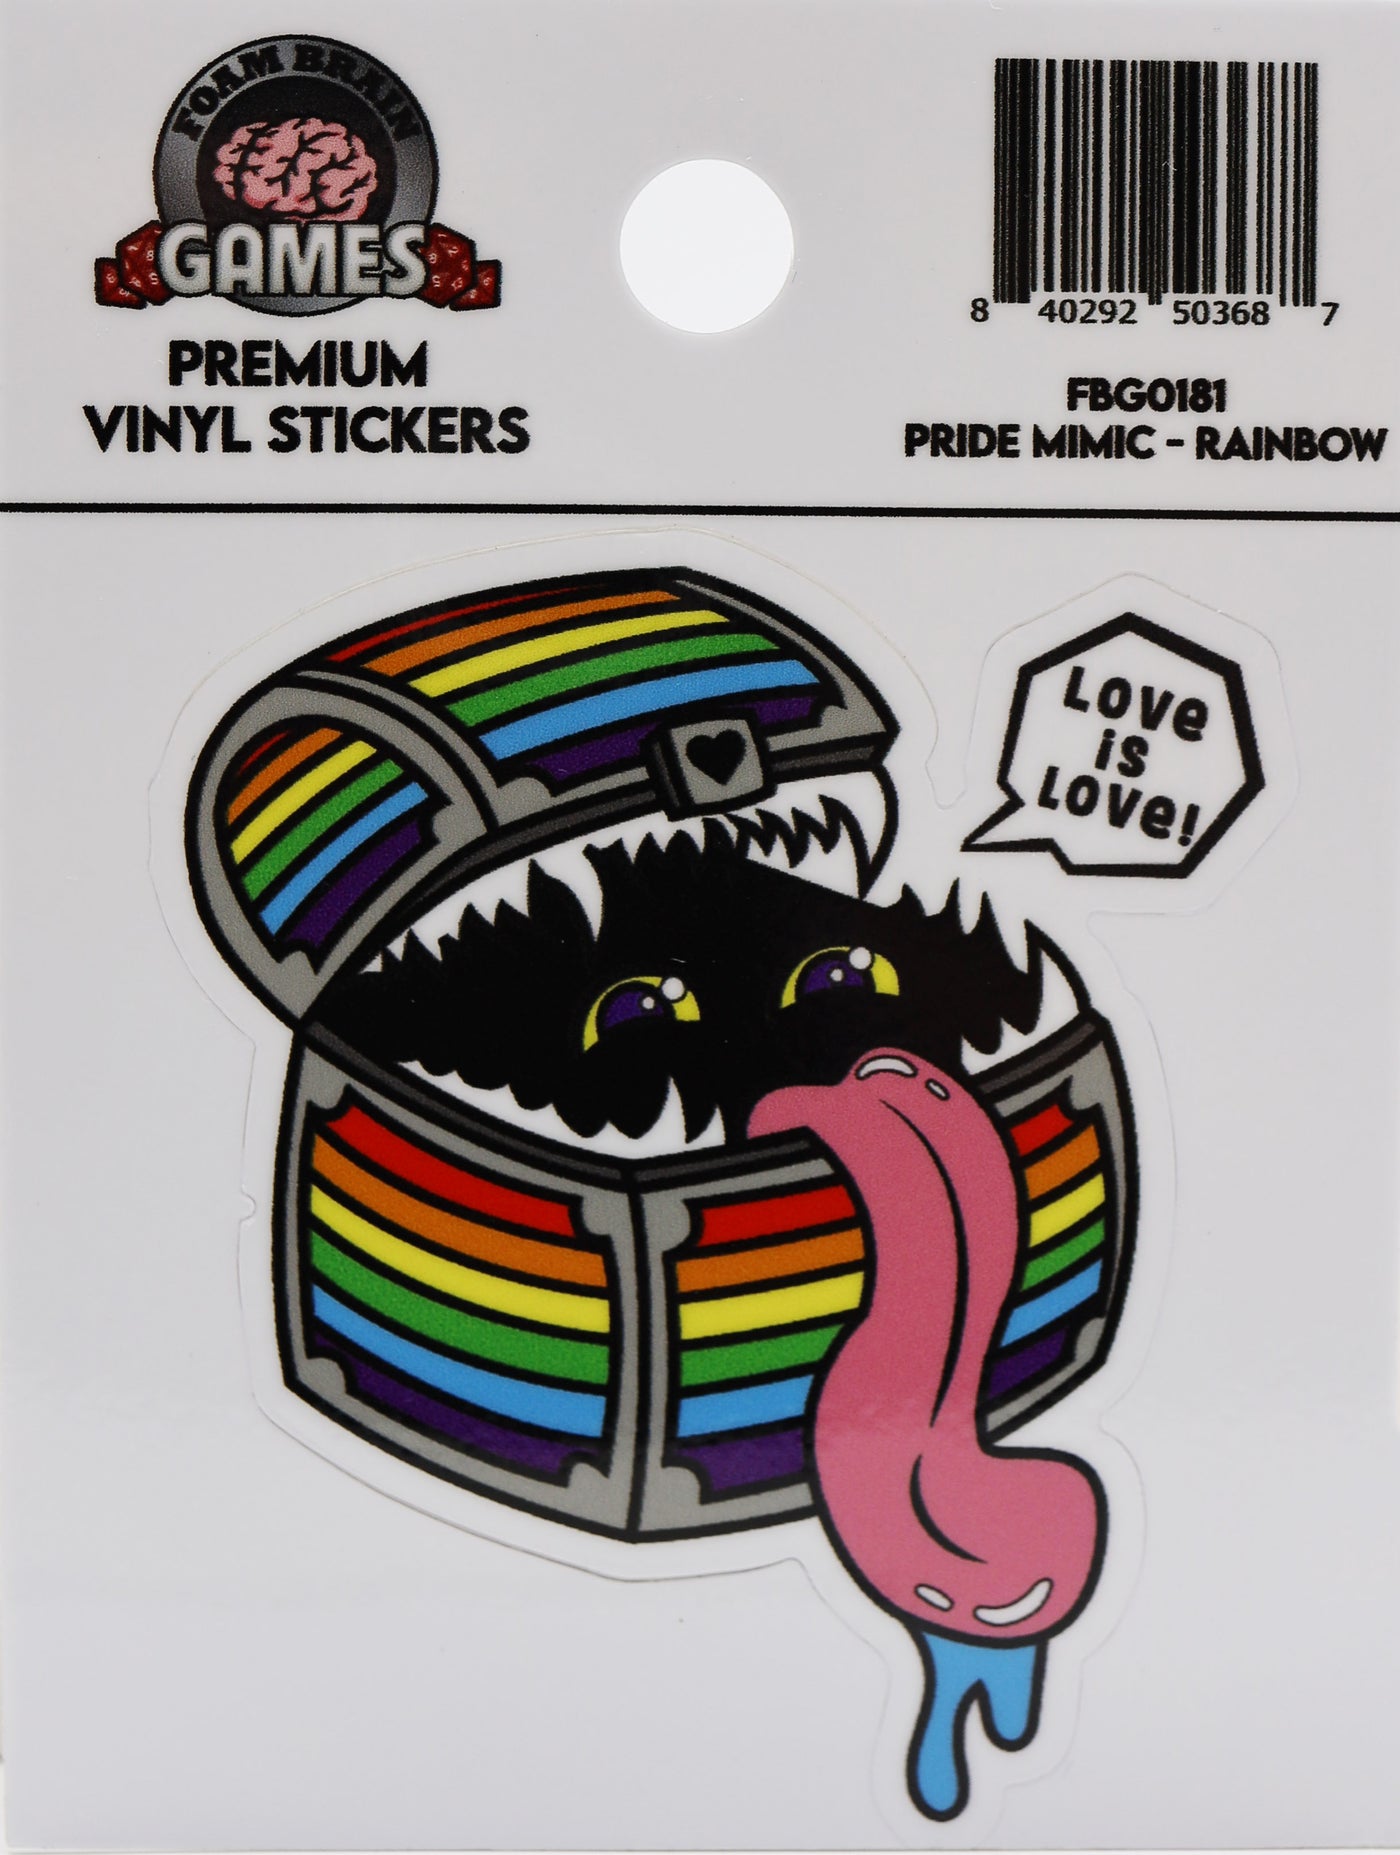 Pride Mimic Sticker: Rainbow Stickers Foam Brain Games